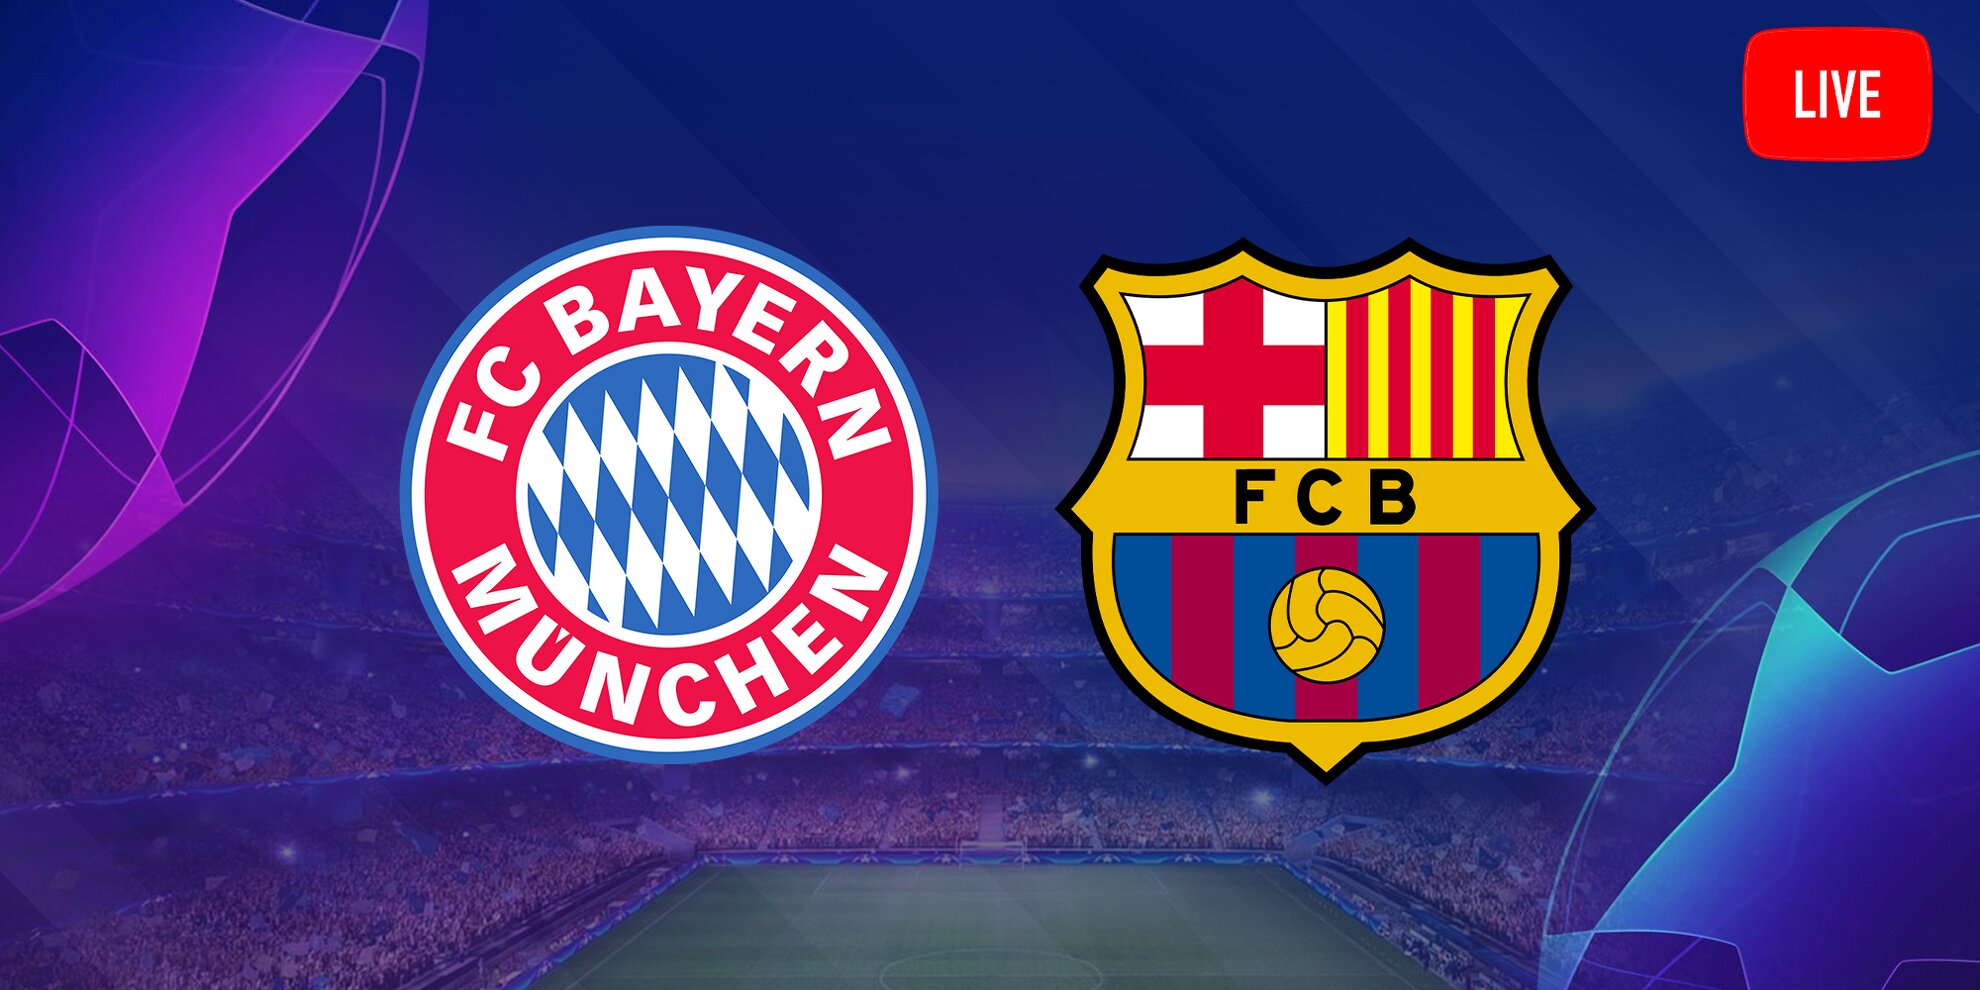 UEFA Champions League 2022-23: Bayern Munich vs FC Barcelona Live Commentary